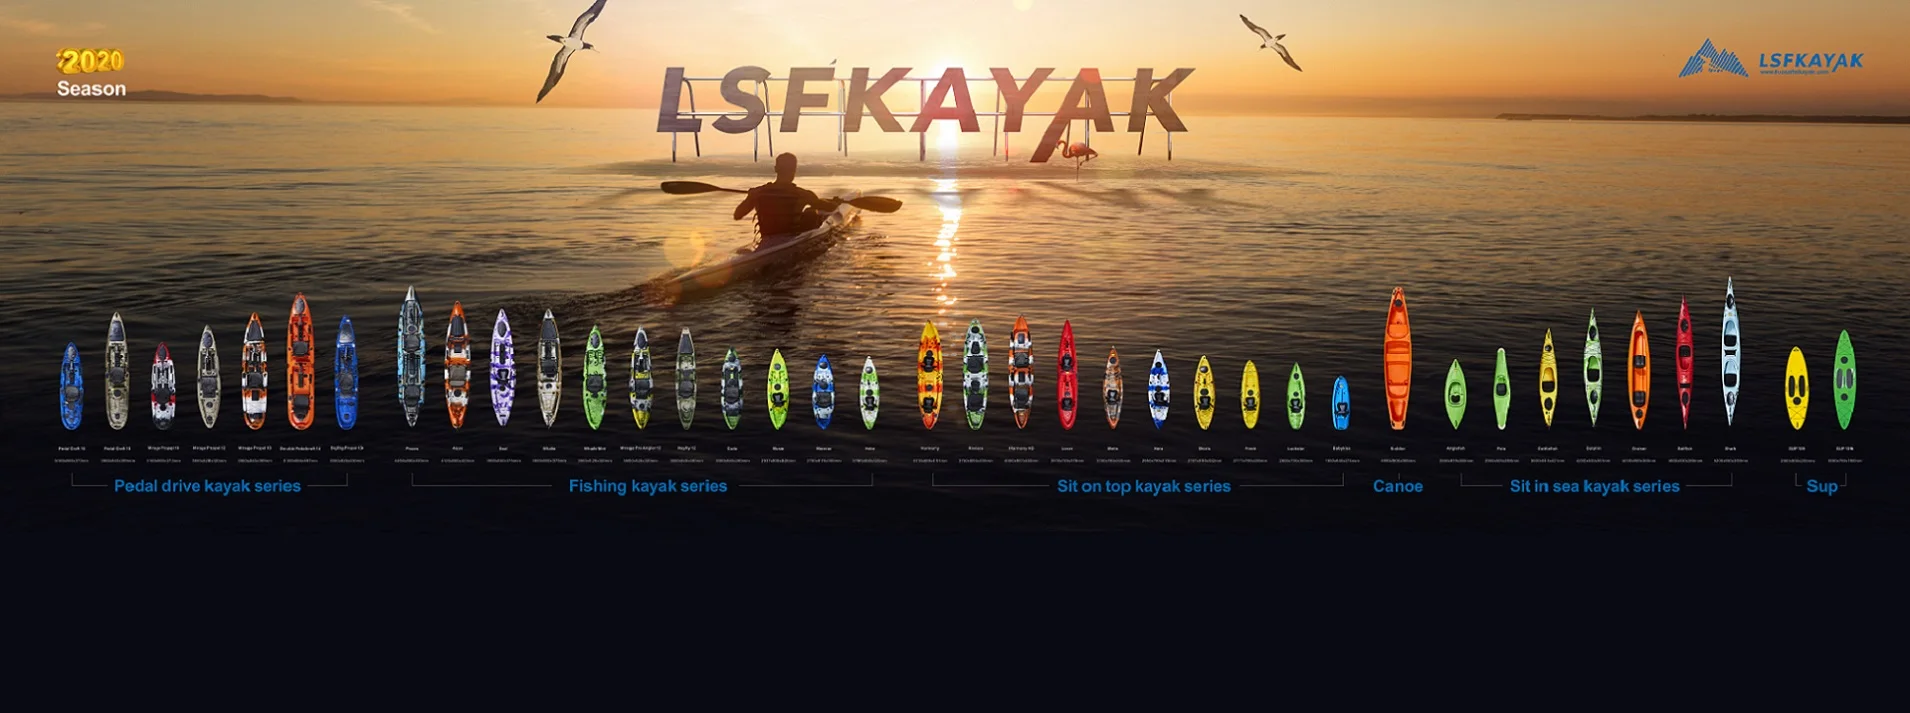 LSF Kayak List